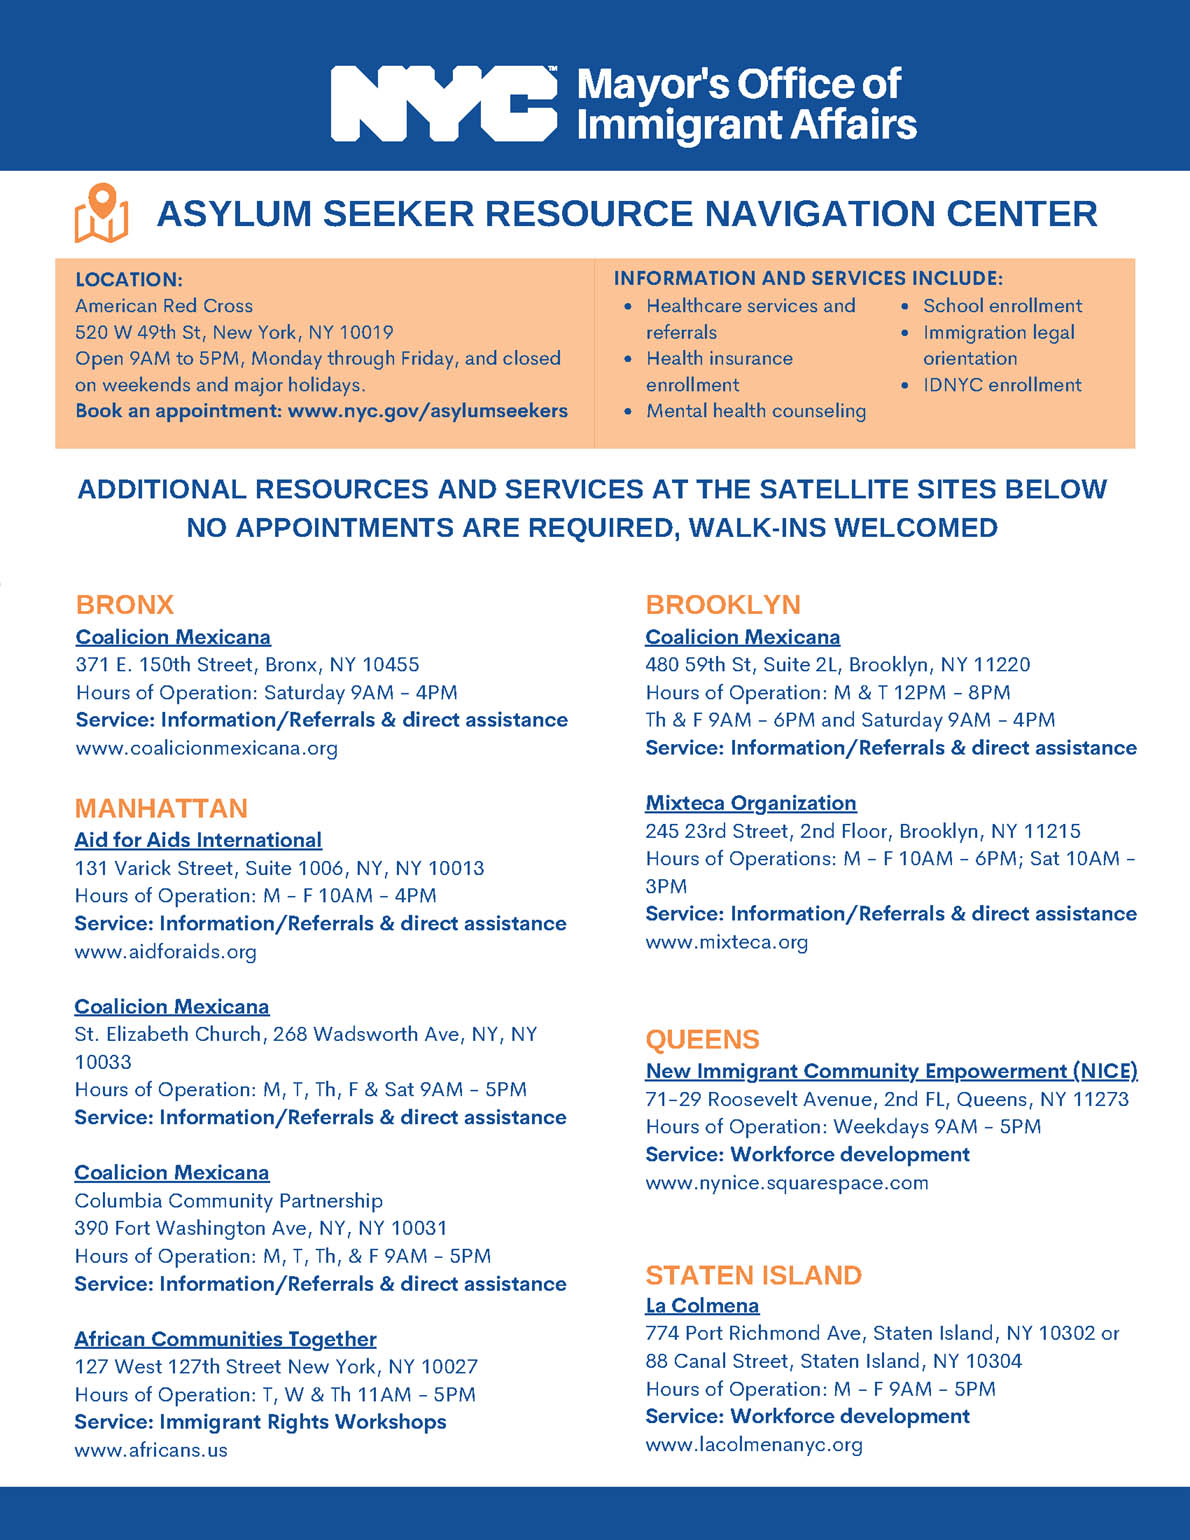 Asylum Seeker Resource Navigation Center Location listing